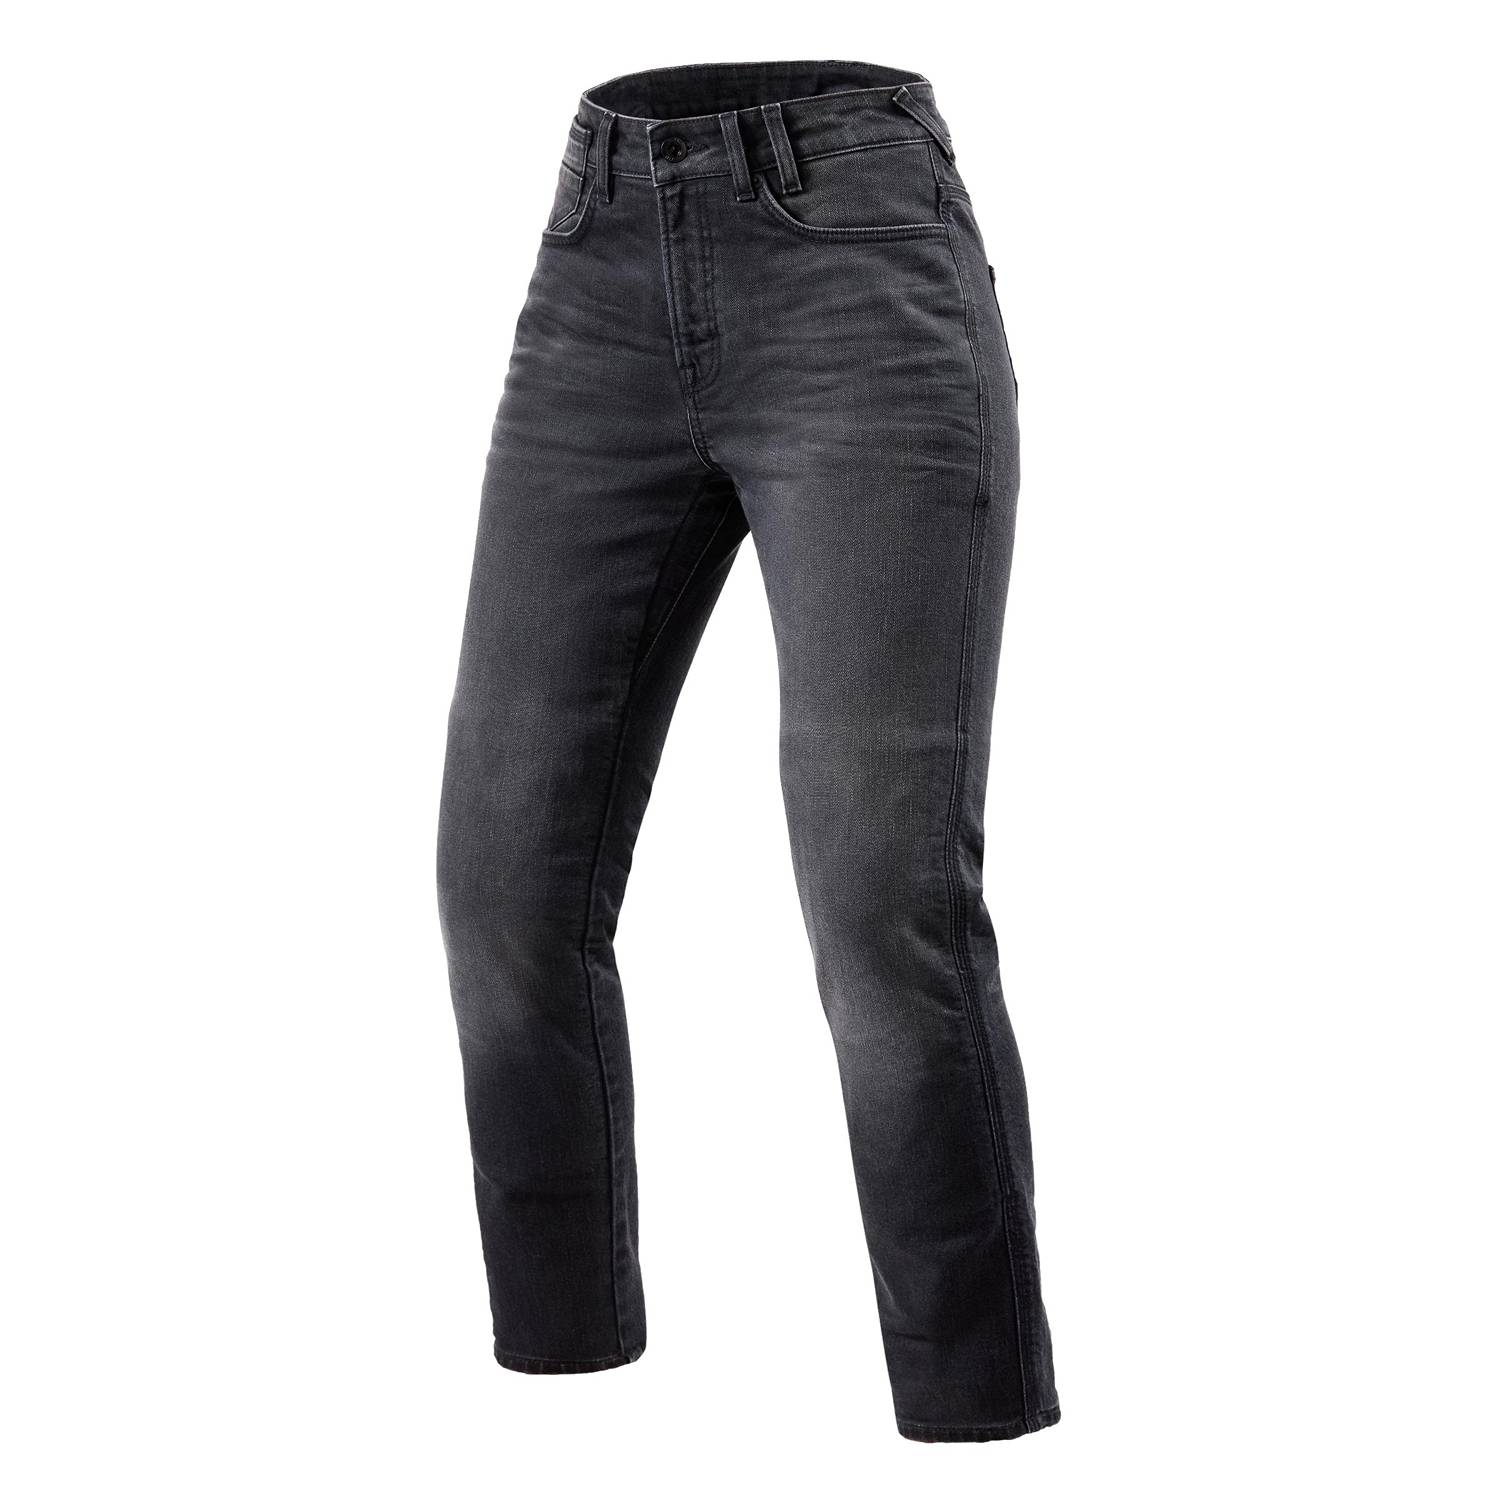 Image of REV'IT! Jeans Victoria 2 Ladies SF Mid Grey Used Motorcycle Jeans Size L32/W34 EN